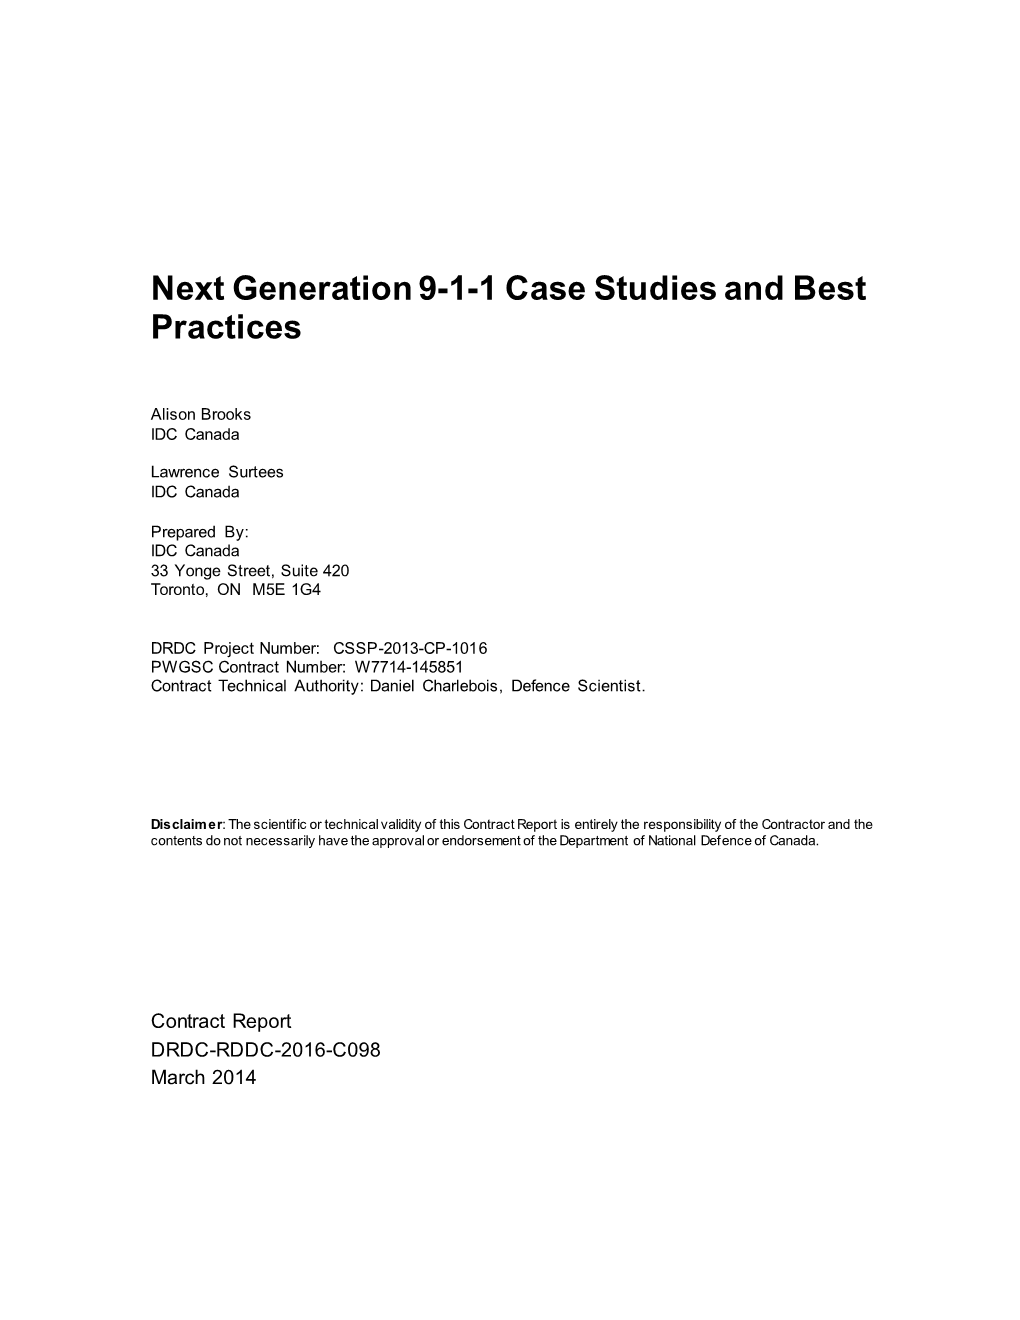 Next Generation 9-1-1 Case Studies and Best Practices